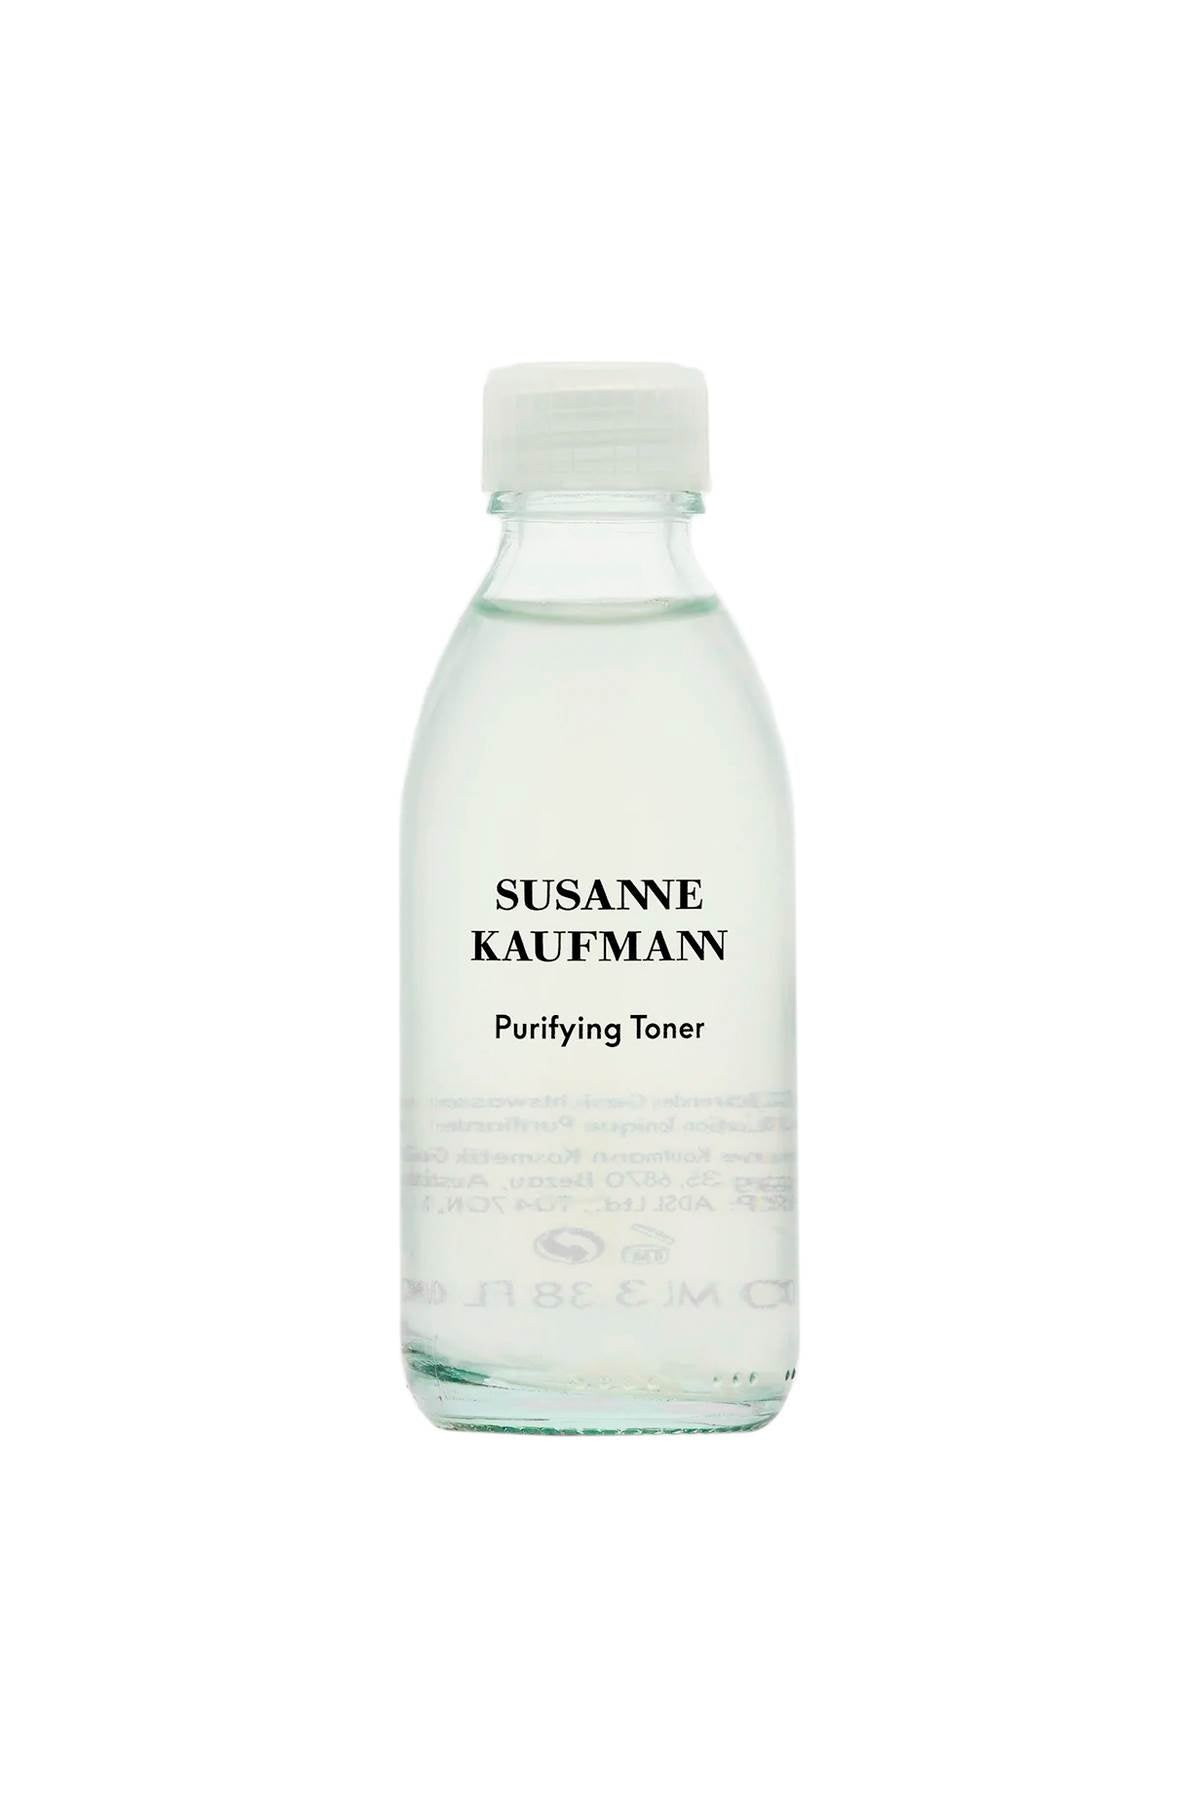 Susanne kaufmann purifying toner - 100 ml-0